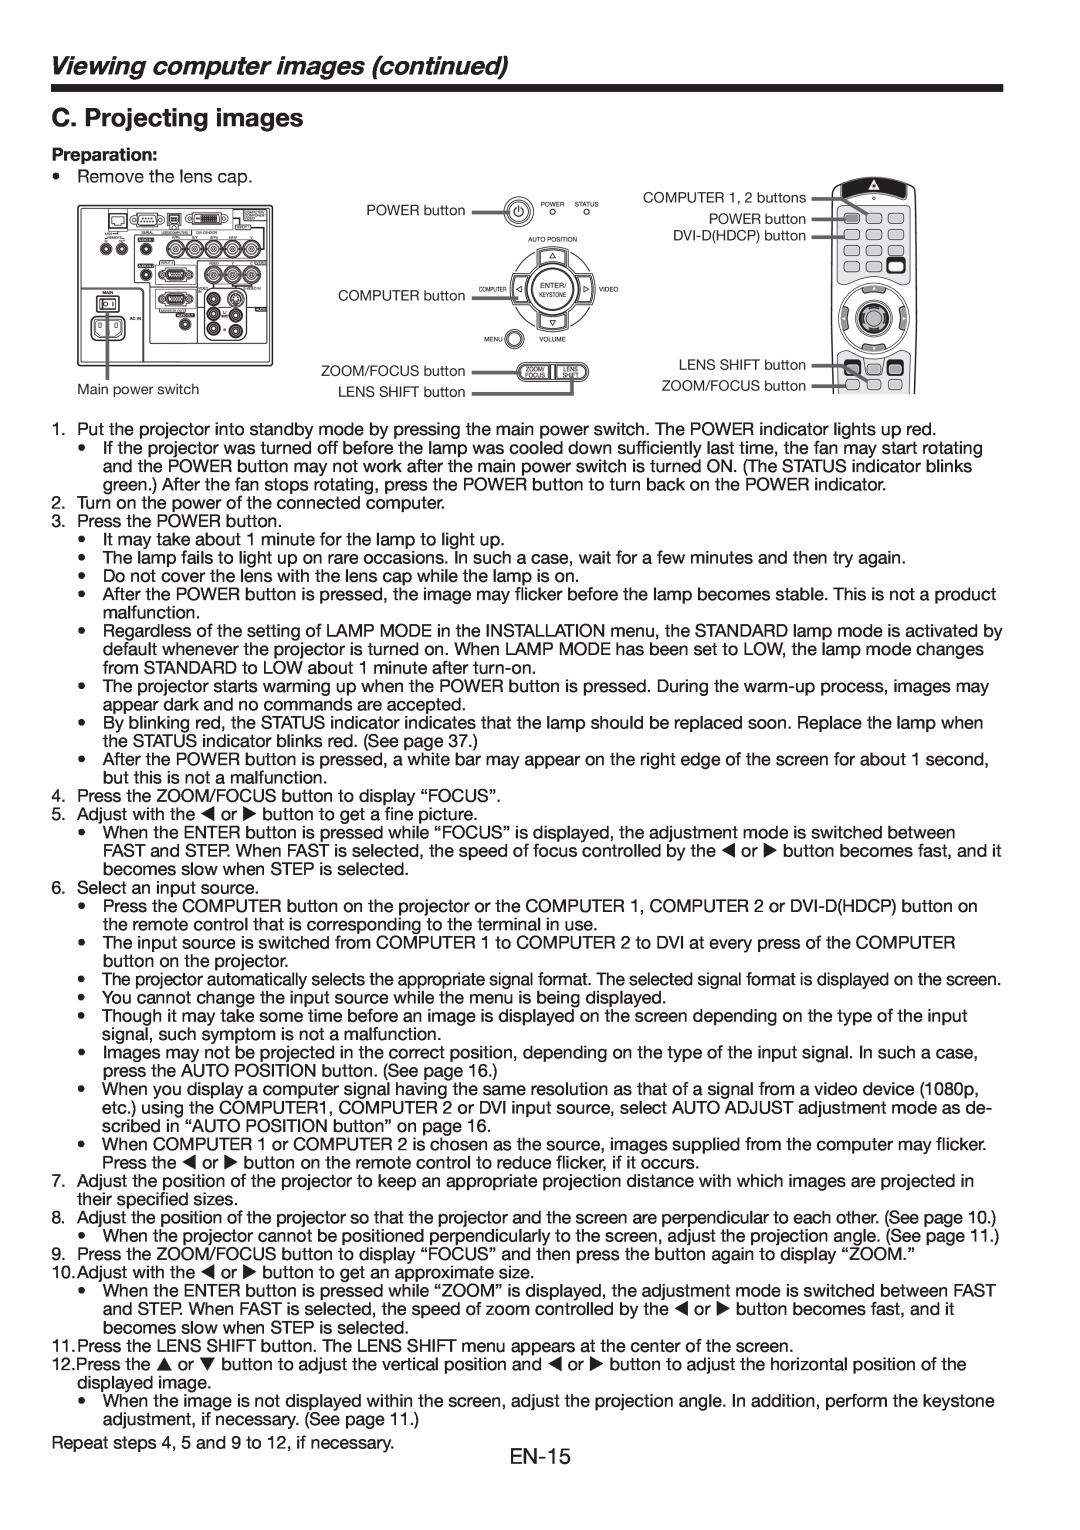 Mitsubishi Electronics FL6900U user manual C. Projecting images, Viewing computer images continued, EN-15, Preparation 